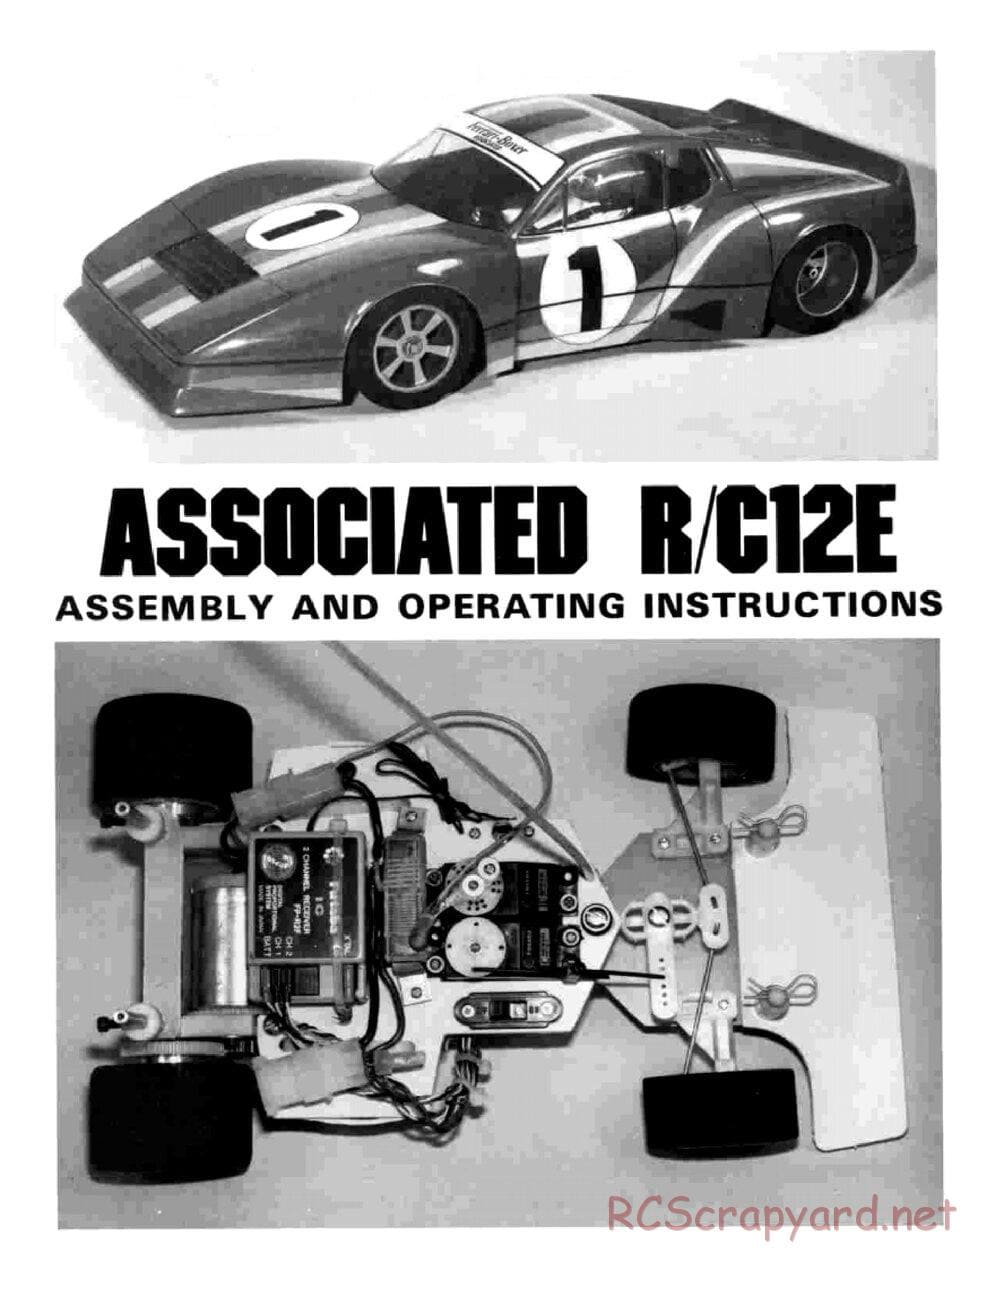 Team Associated - RC12E - Manual - Page 1